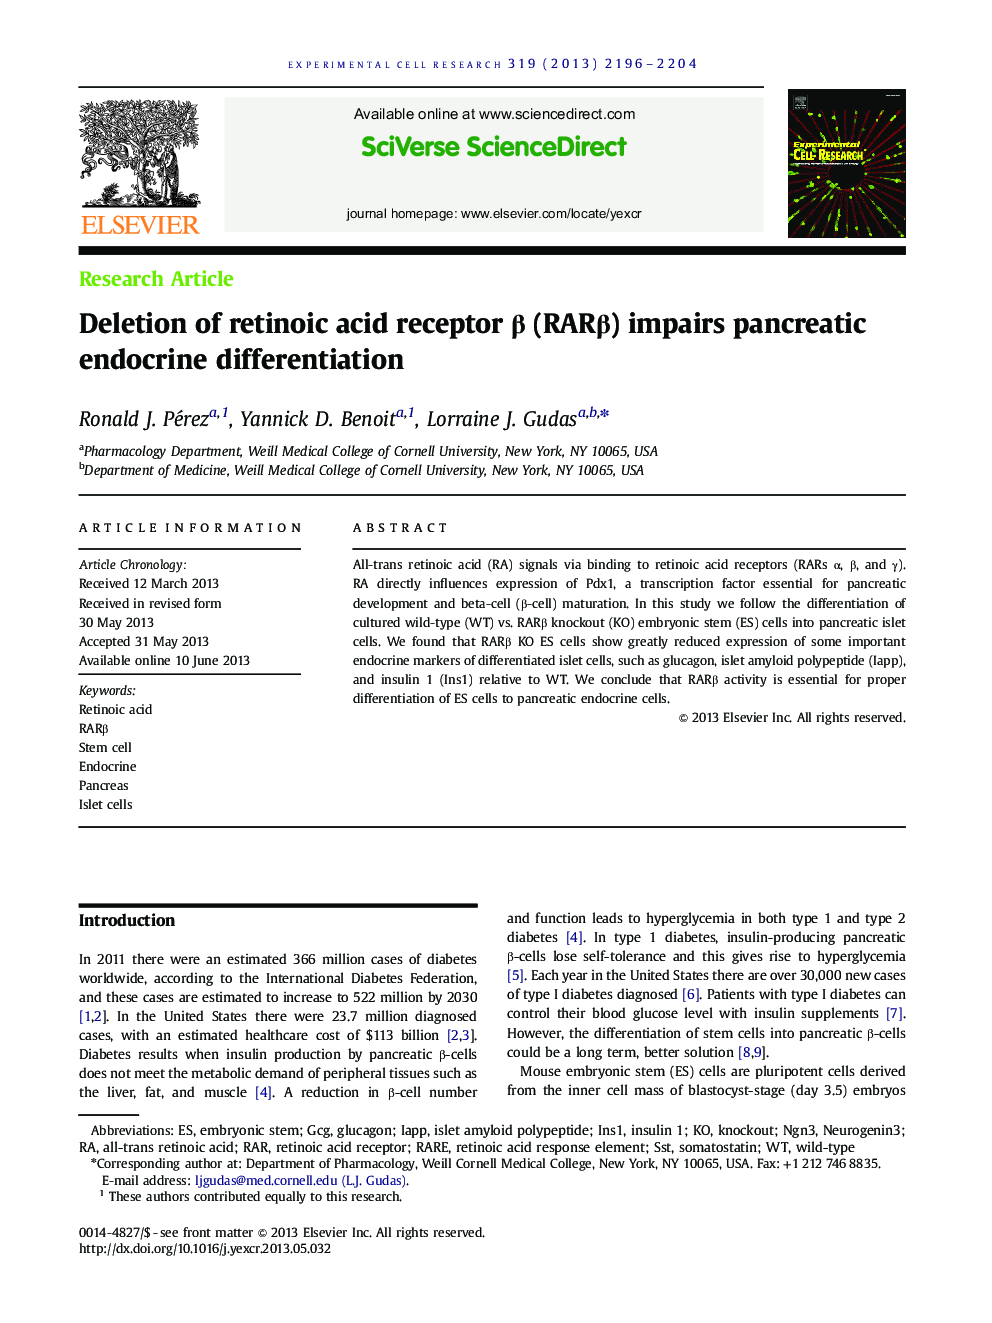 Deletion of retinoic acid receptor Î² (RARÎ²) impairs pancreatic endocrine differentiation